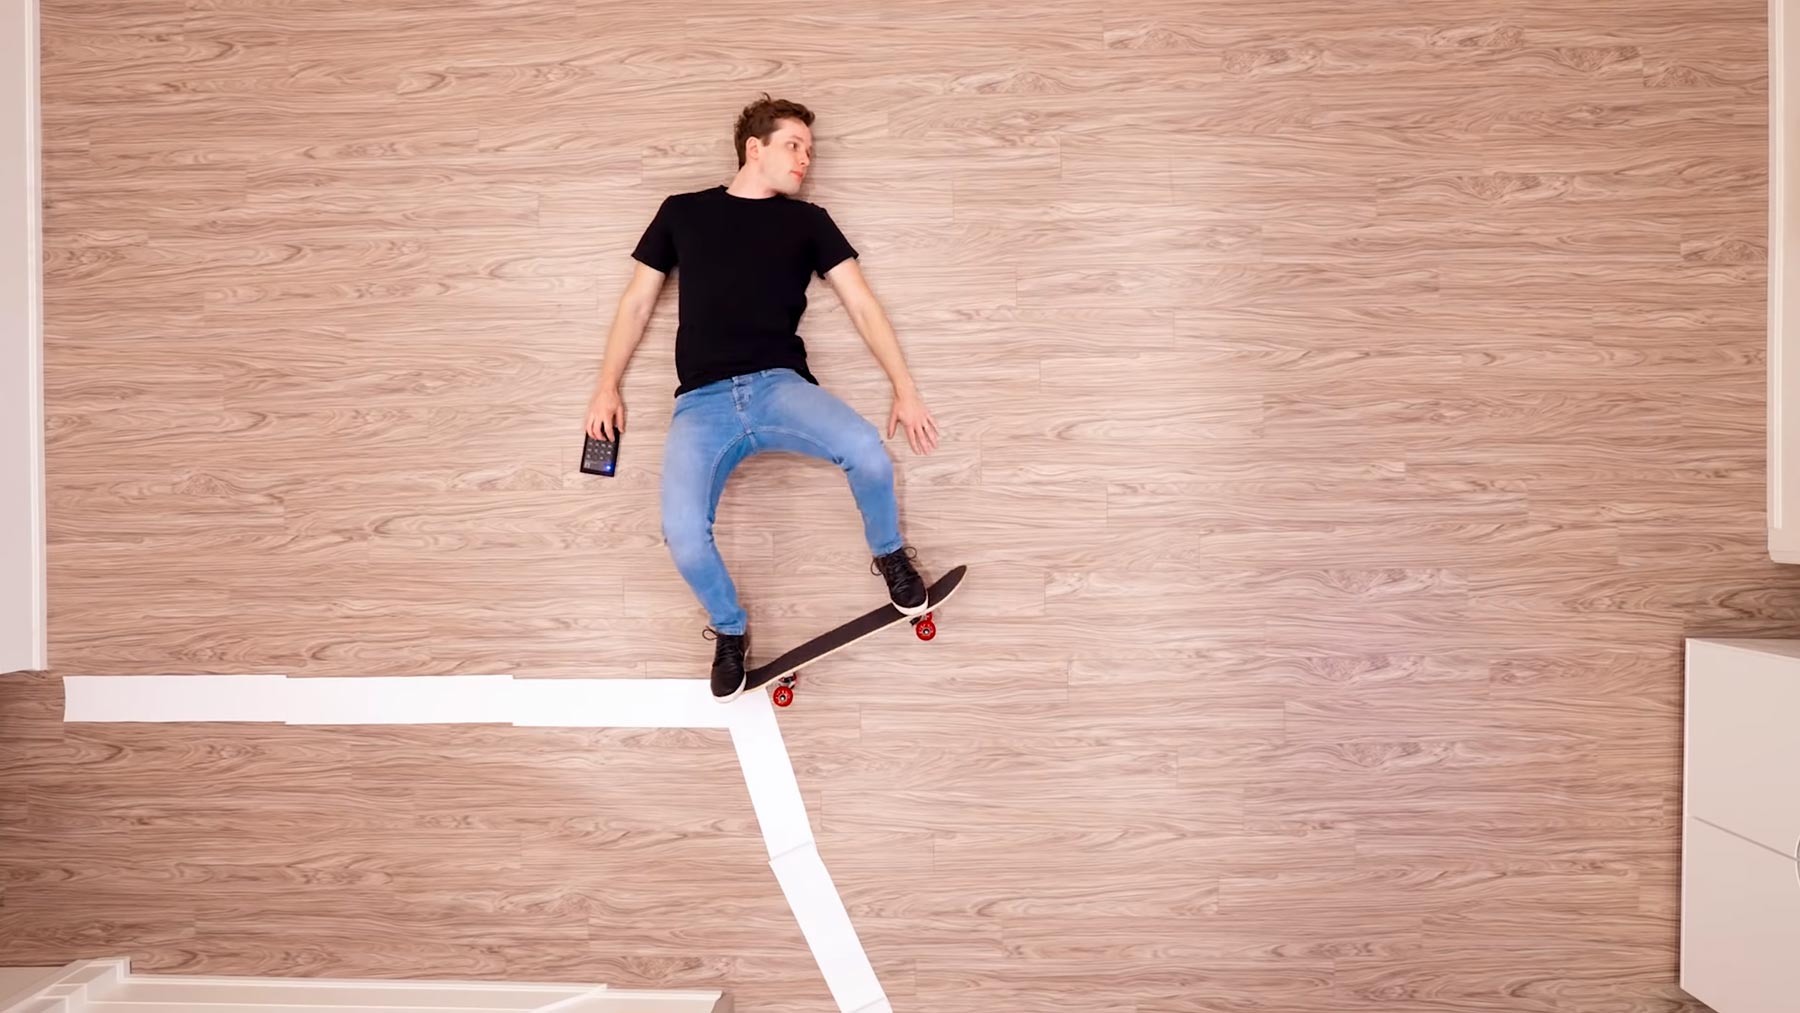 Kevin Parry fährt auf dem Boden liegend Skateboard